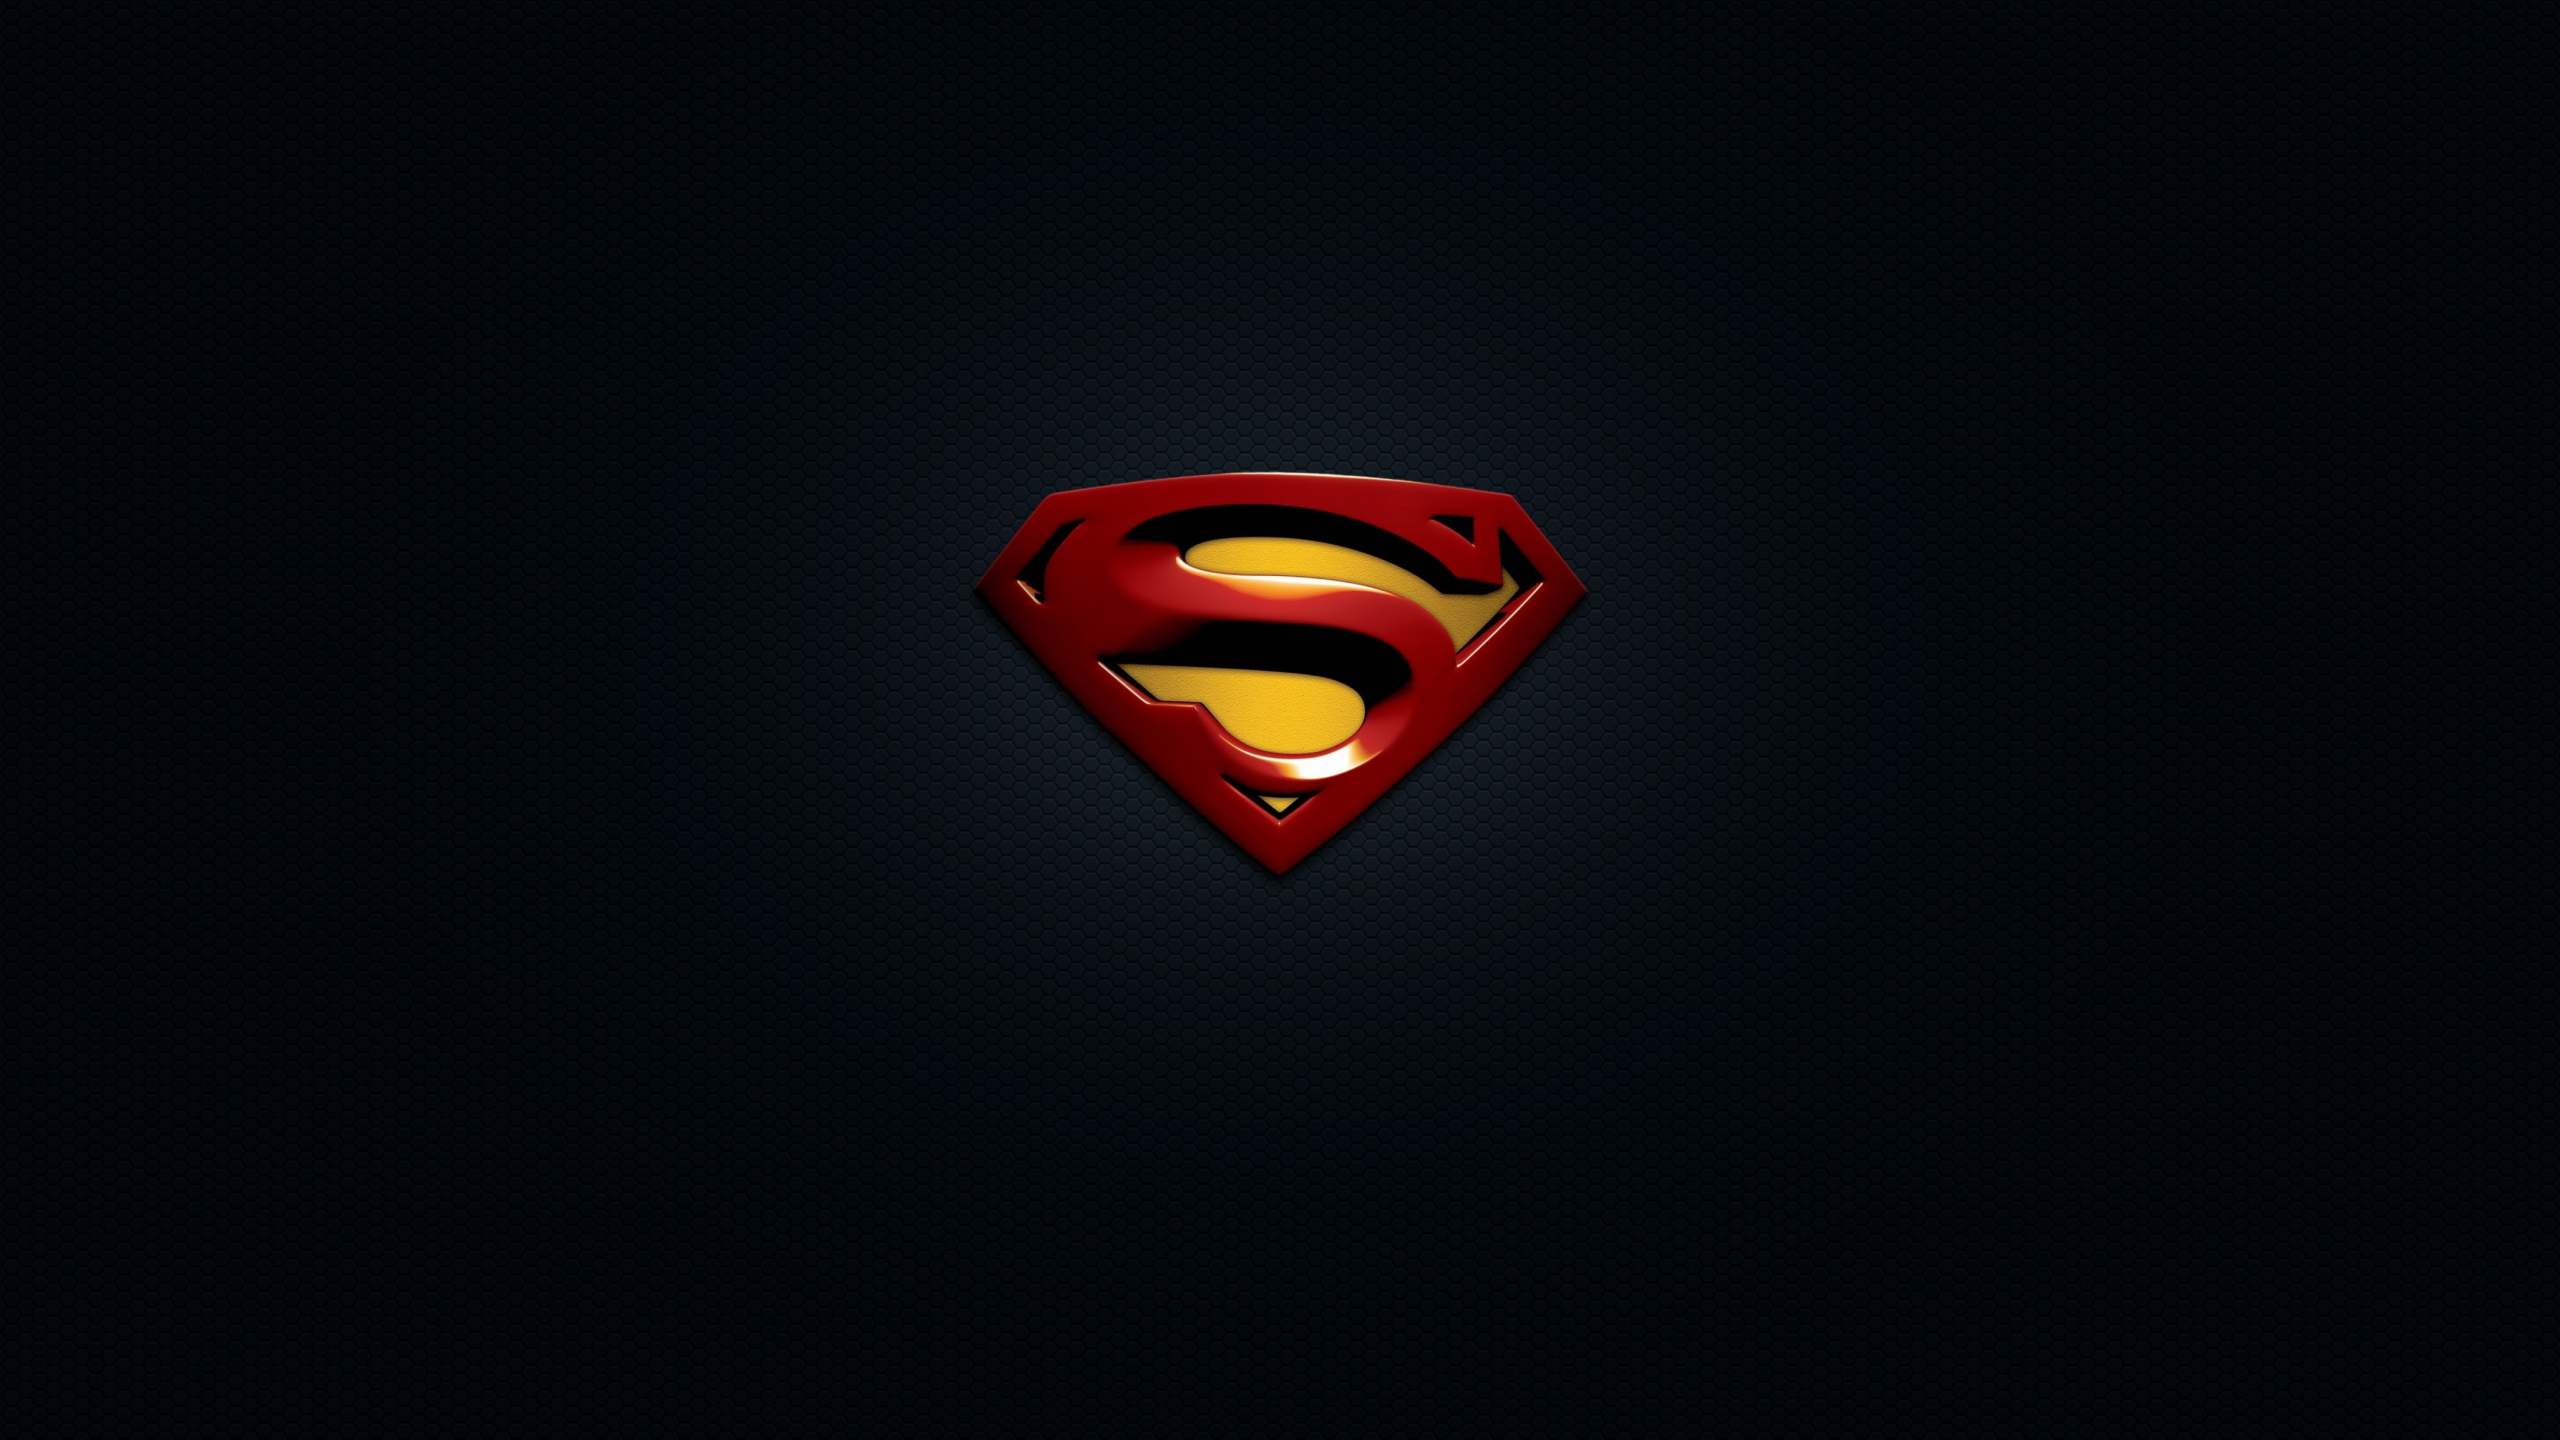 2560x1440 Download wallpaper superman, logo, minimal, dual wide 16:9 hd background, 4403